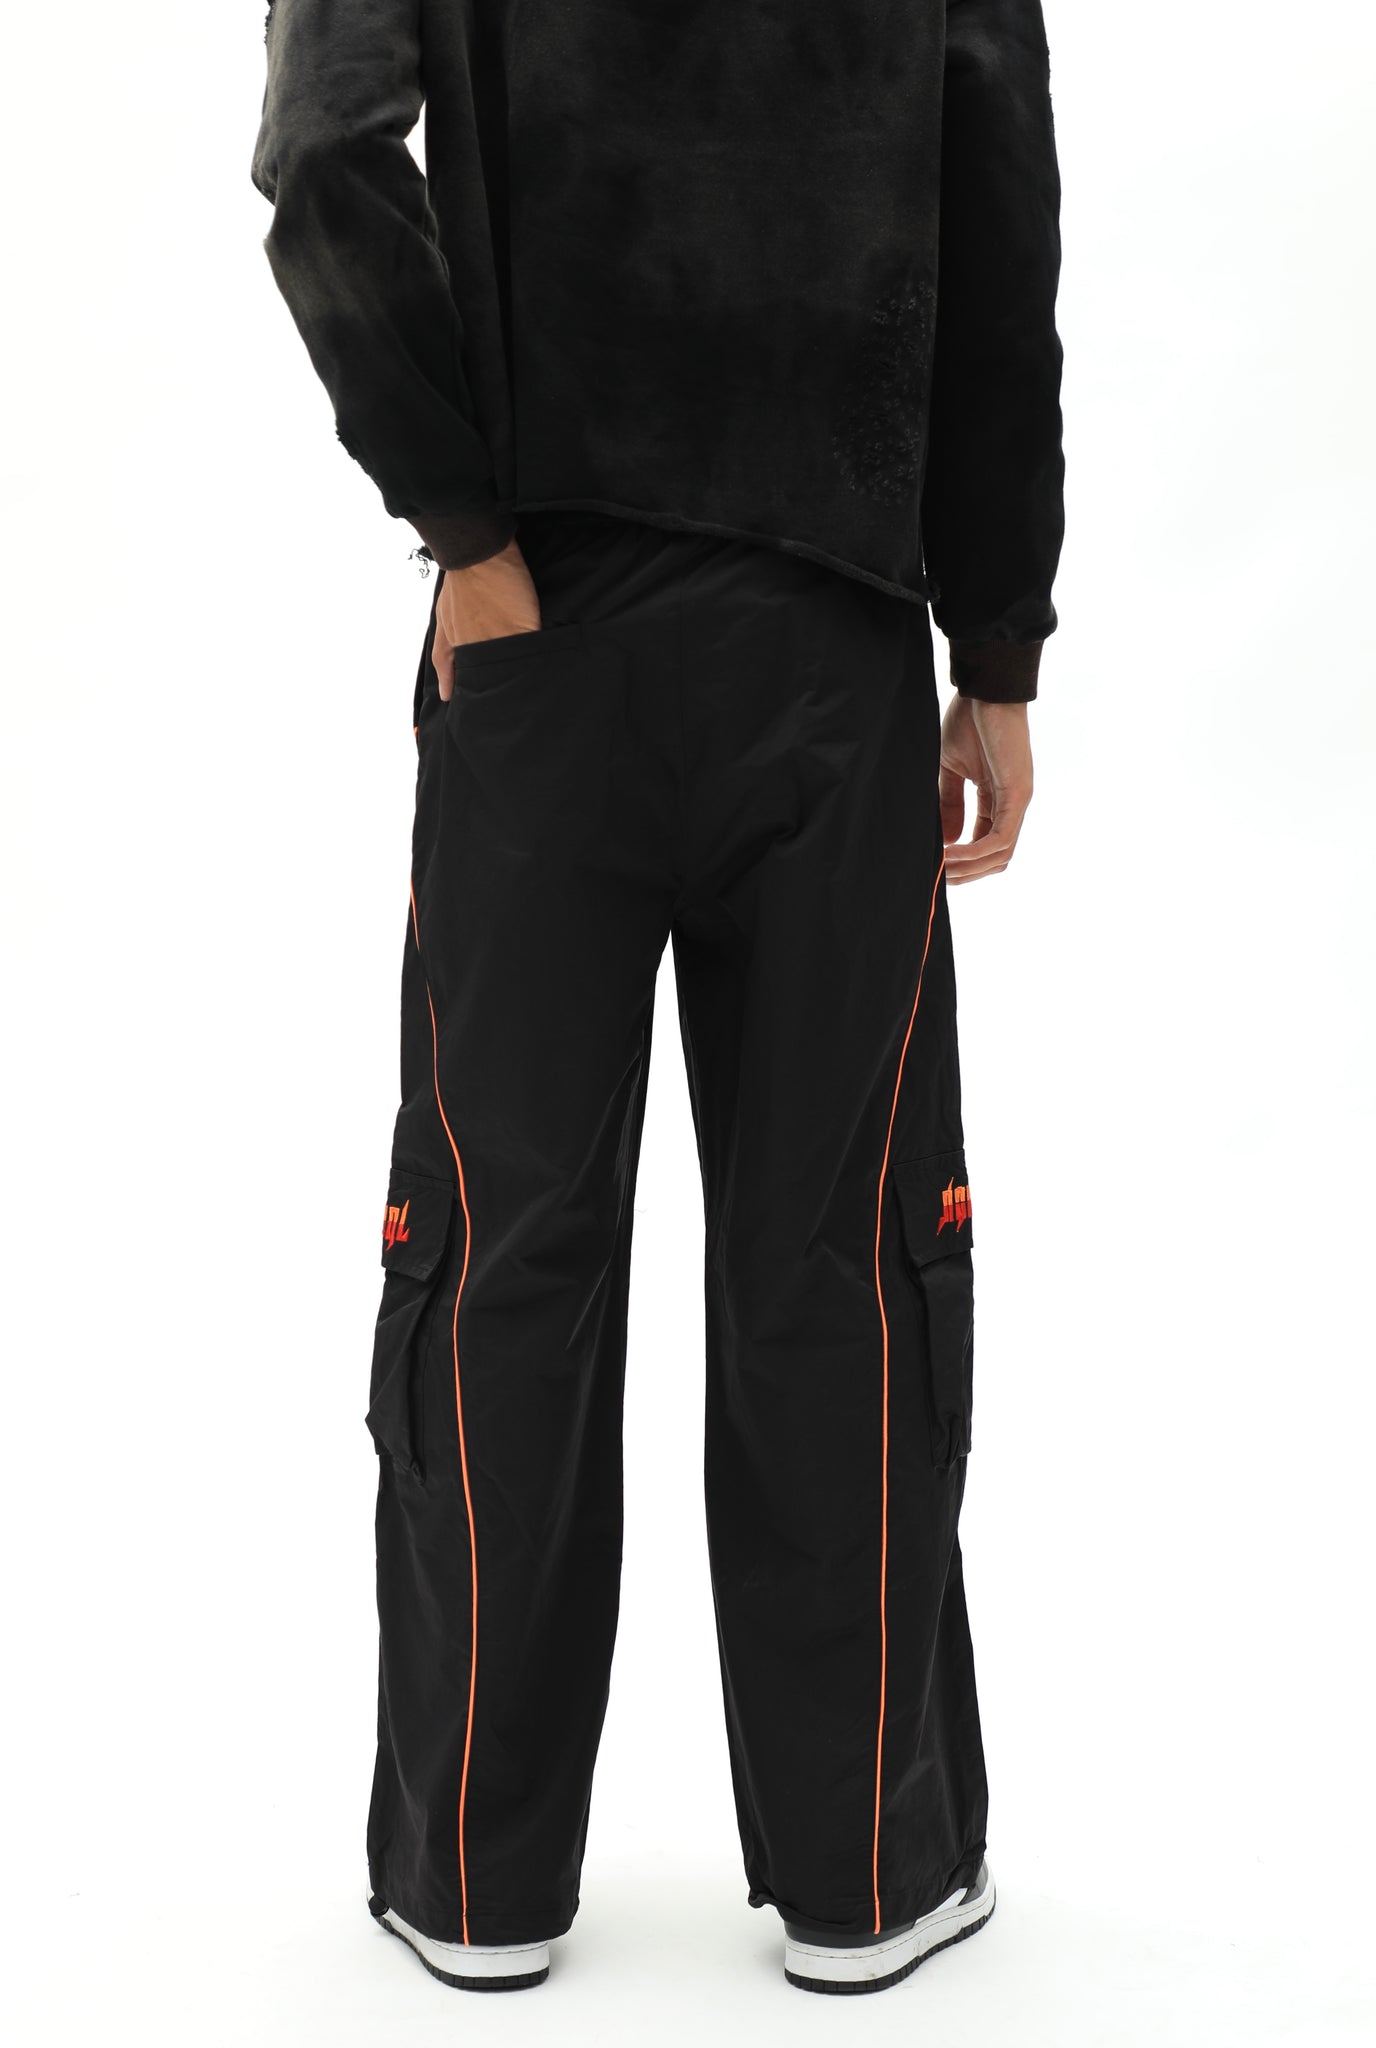 Black/Orange Baggy Cargo Sports Track Pants